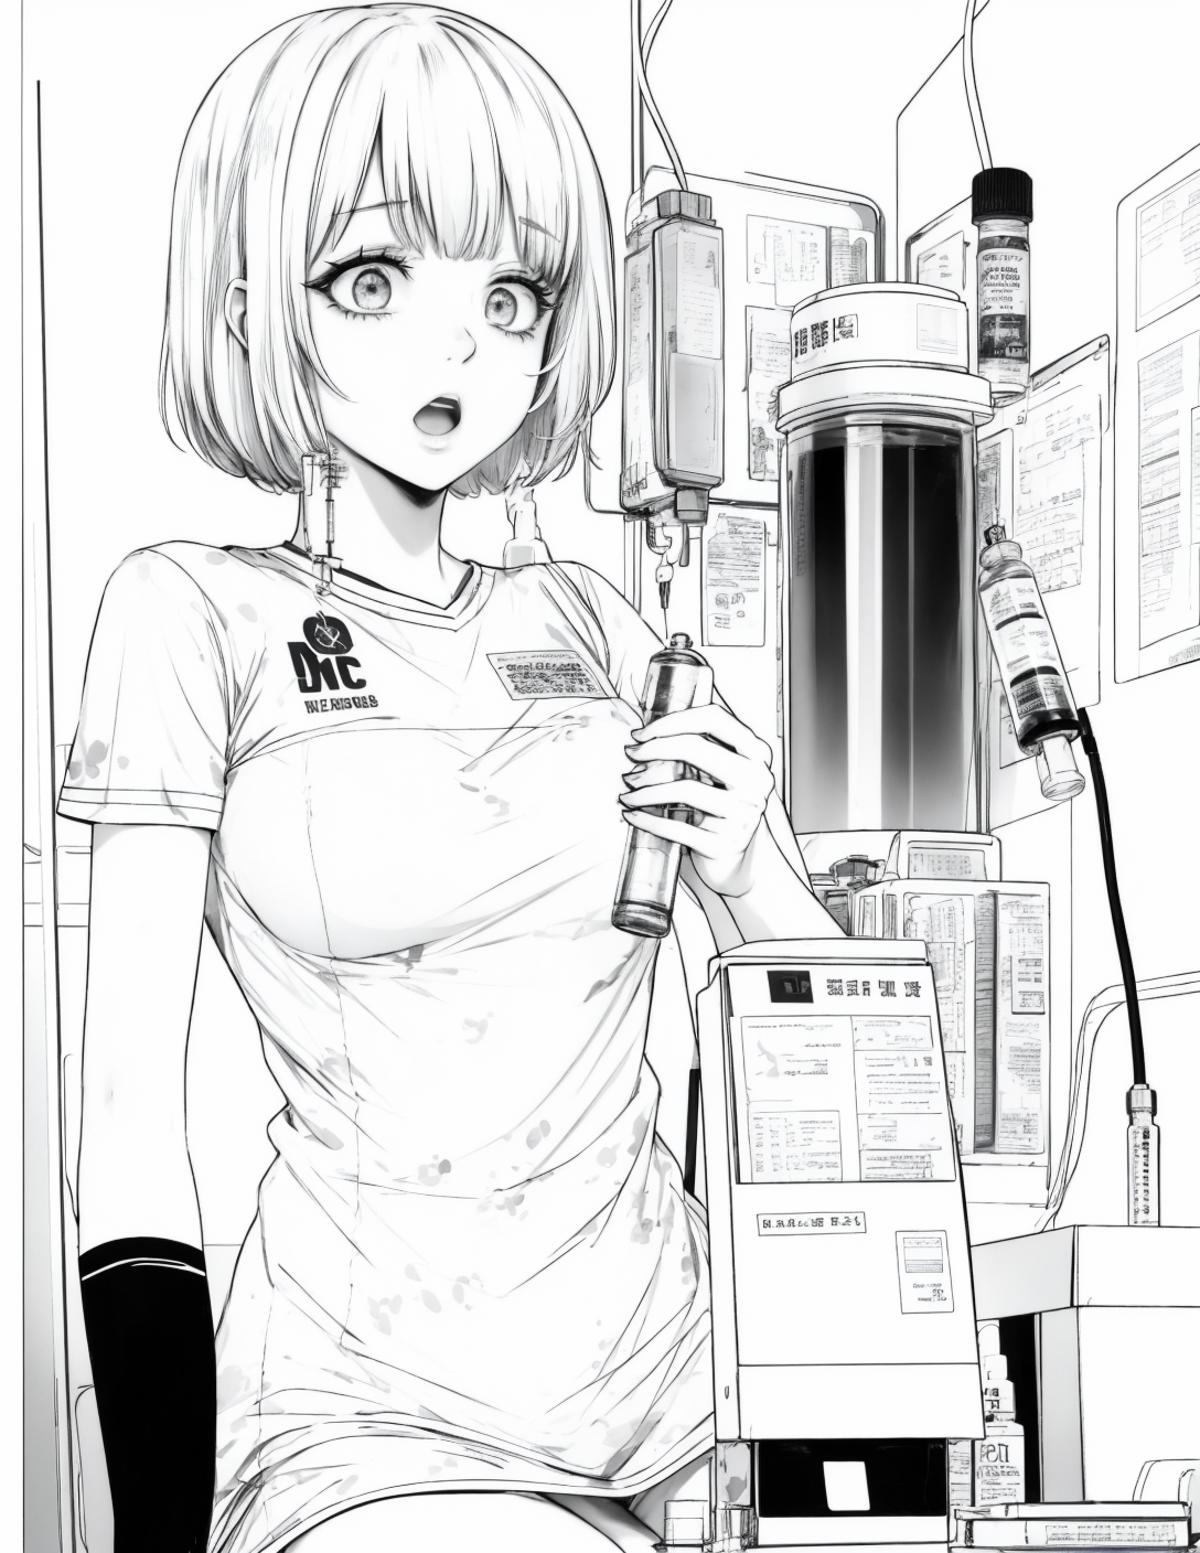 Anime Lineart / Manga-like (线稿/線画/マンガ風/漫画风) Style image by Xalkenshtein